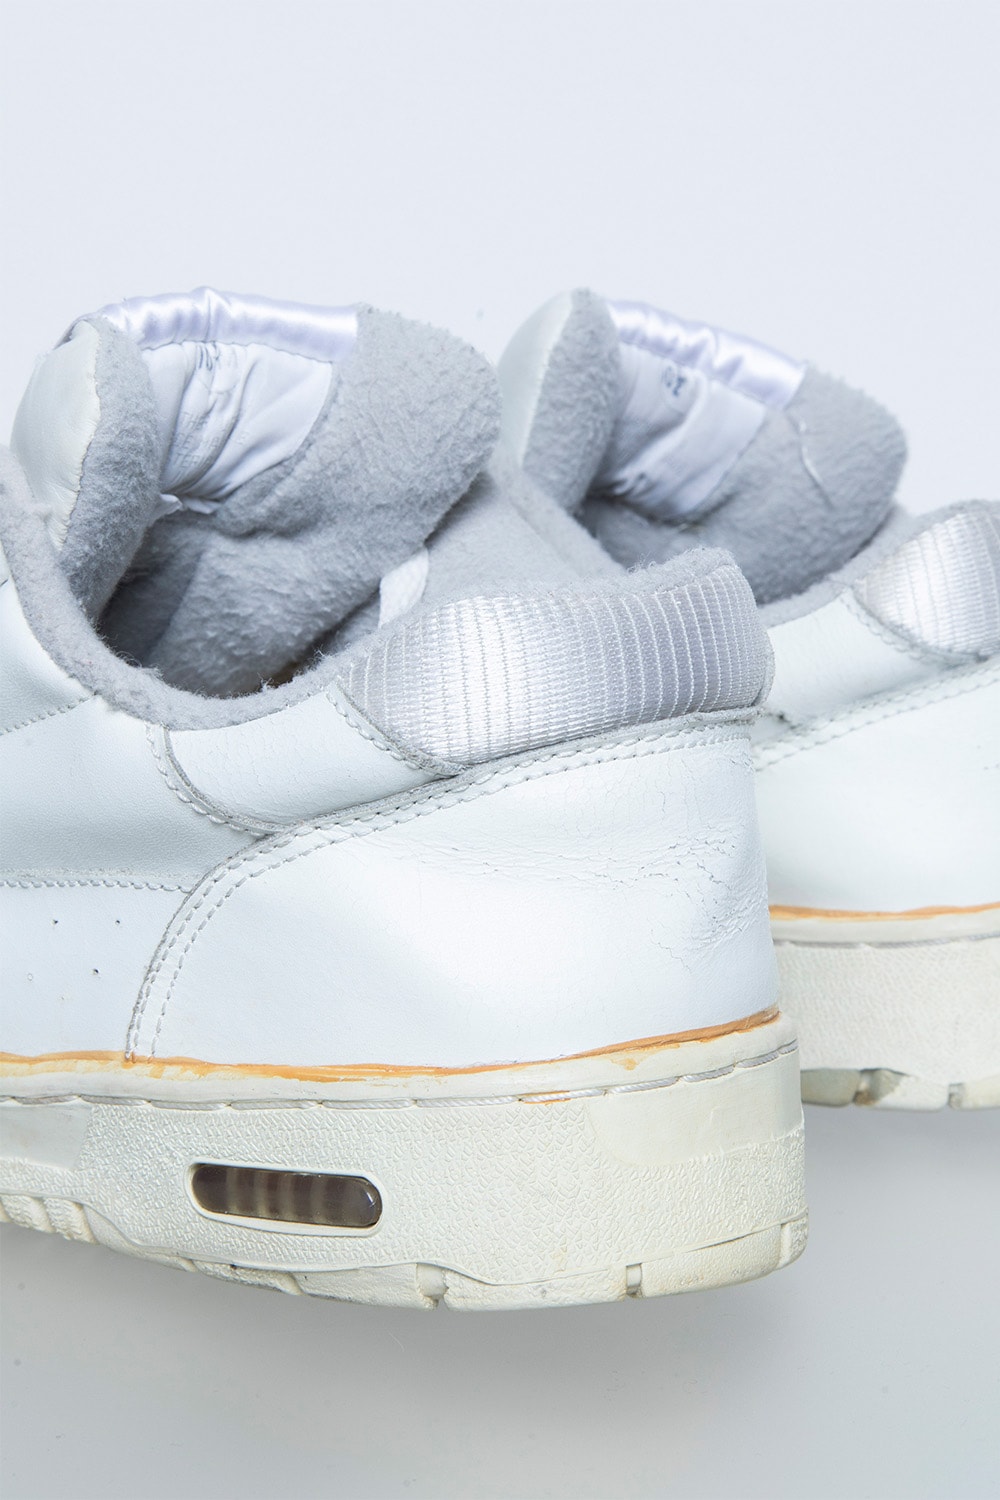 $50,000 Apple Sneakers Steve Jobs Tim Cook RARE Very Rare Personal Pair '90s Apple Sneaker